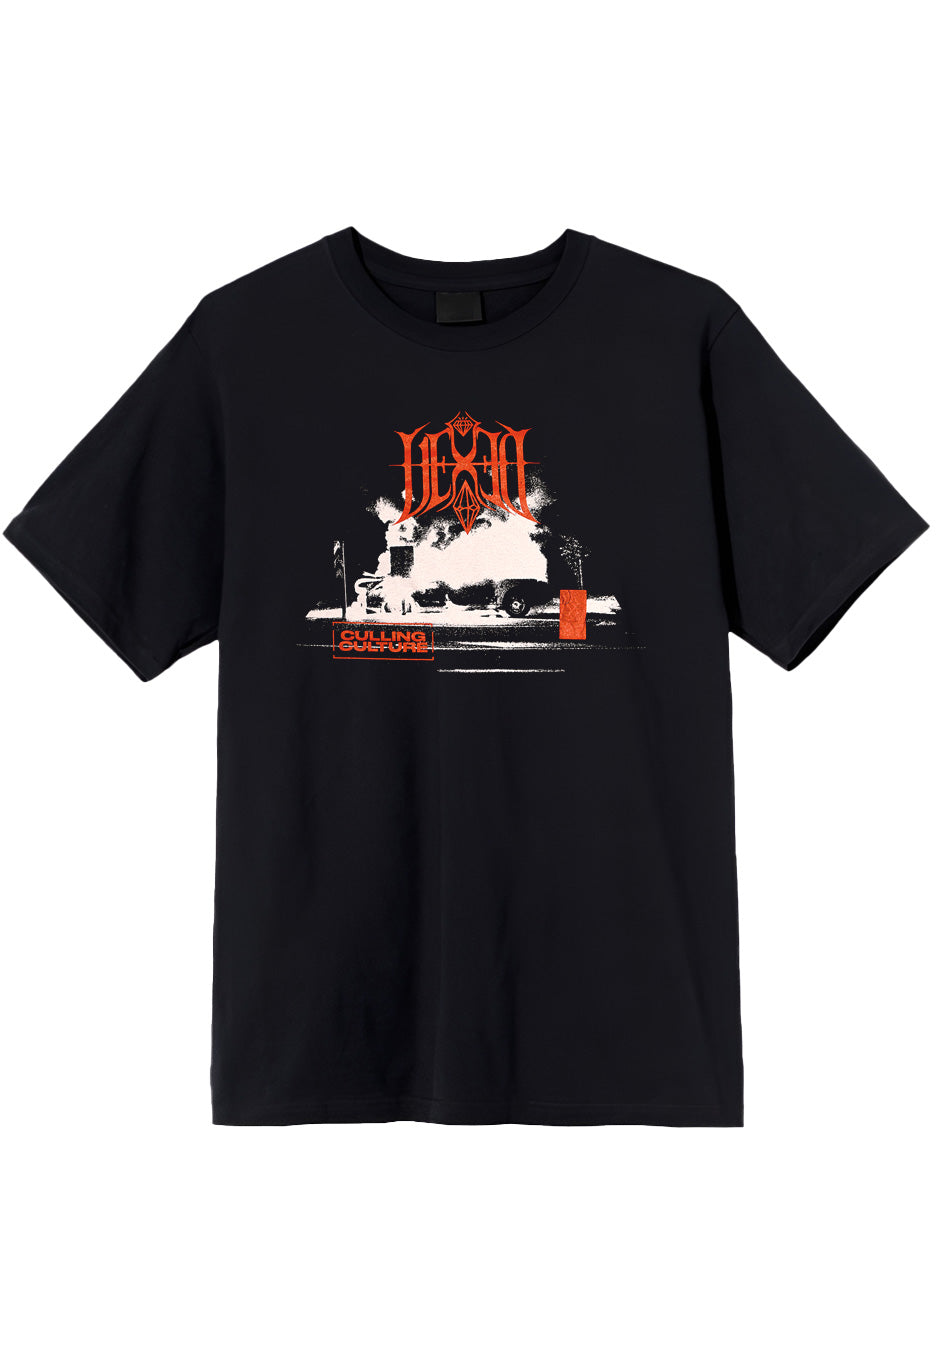 Vexed - Burning Car - T-Shirt